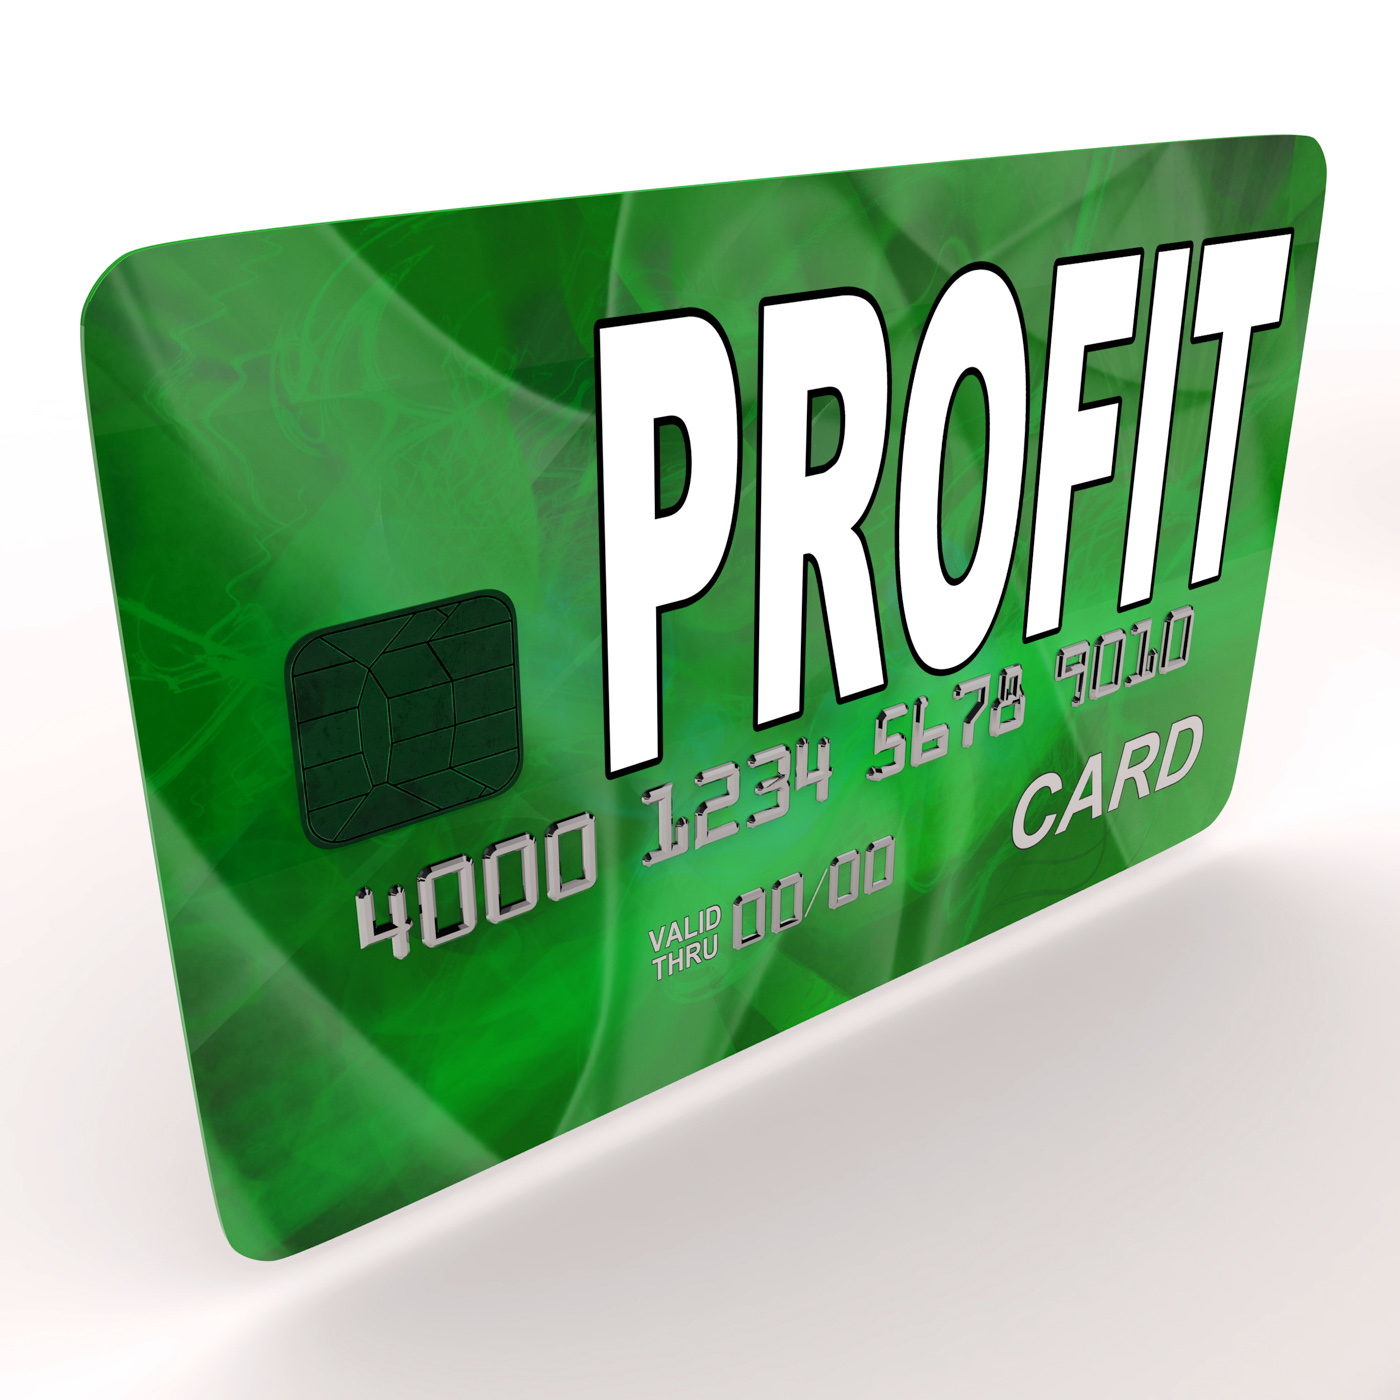 Profit on credit debit card shows earn money photo